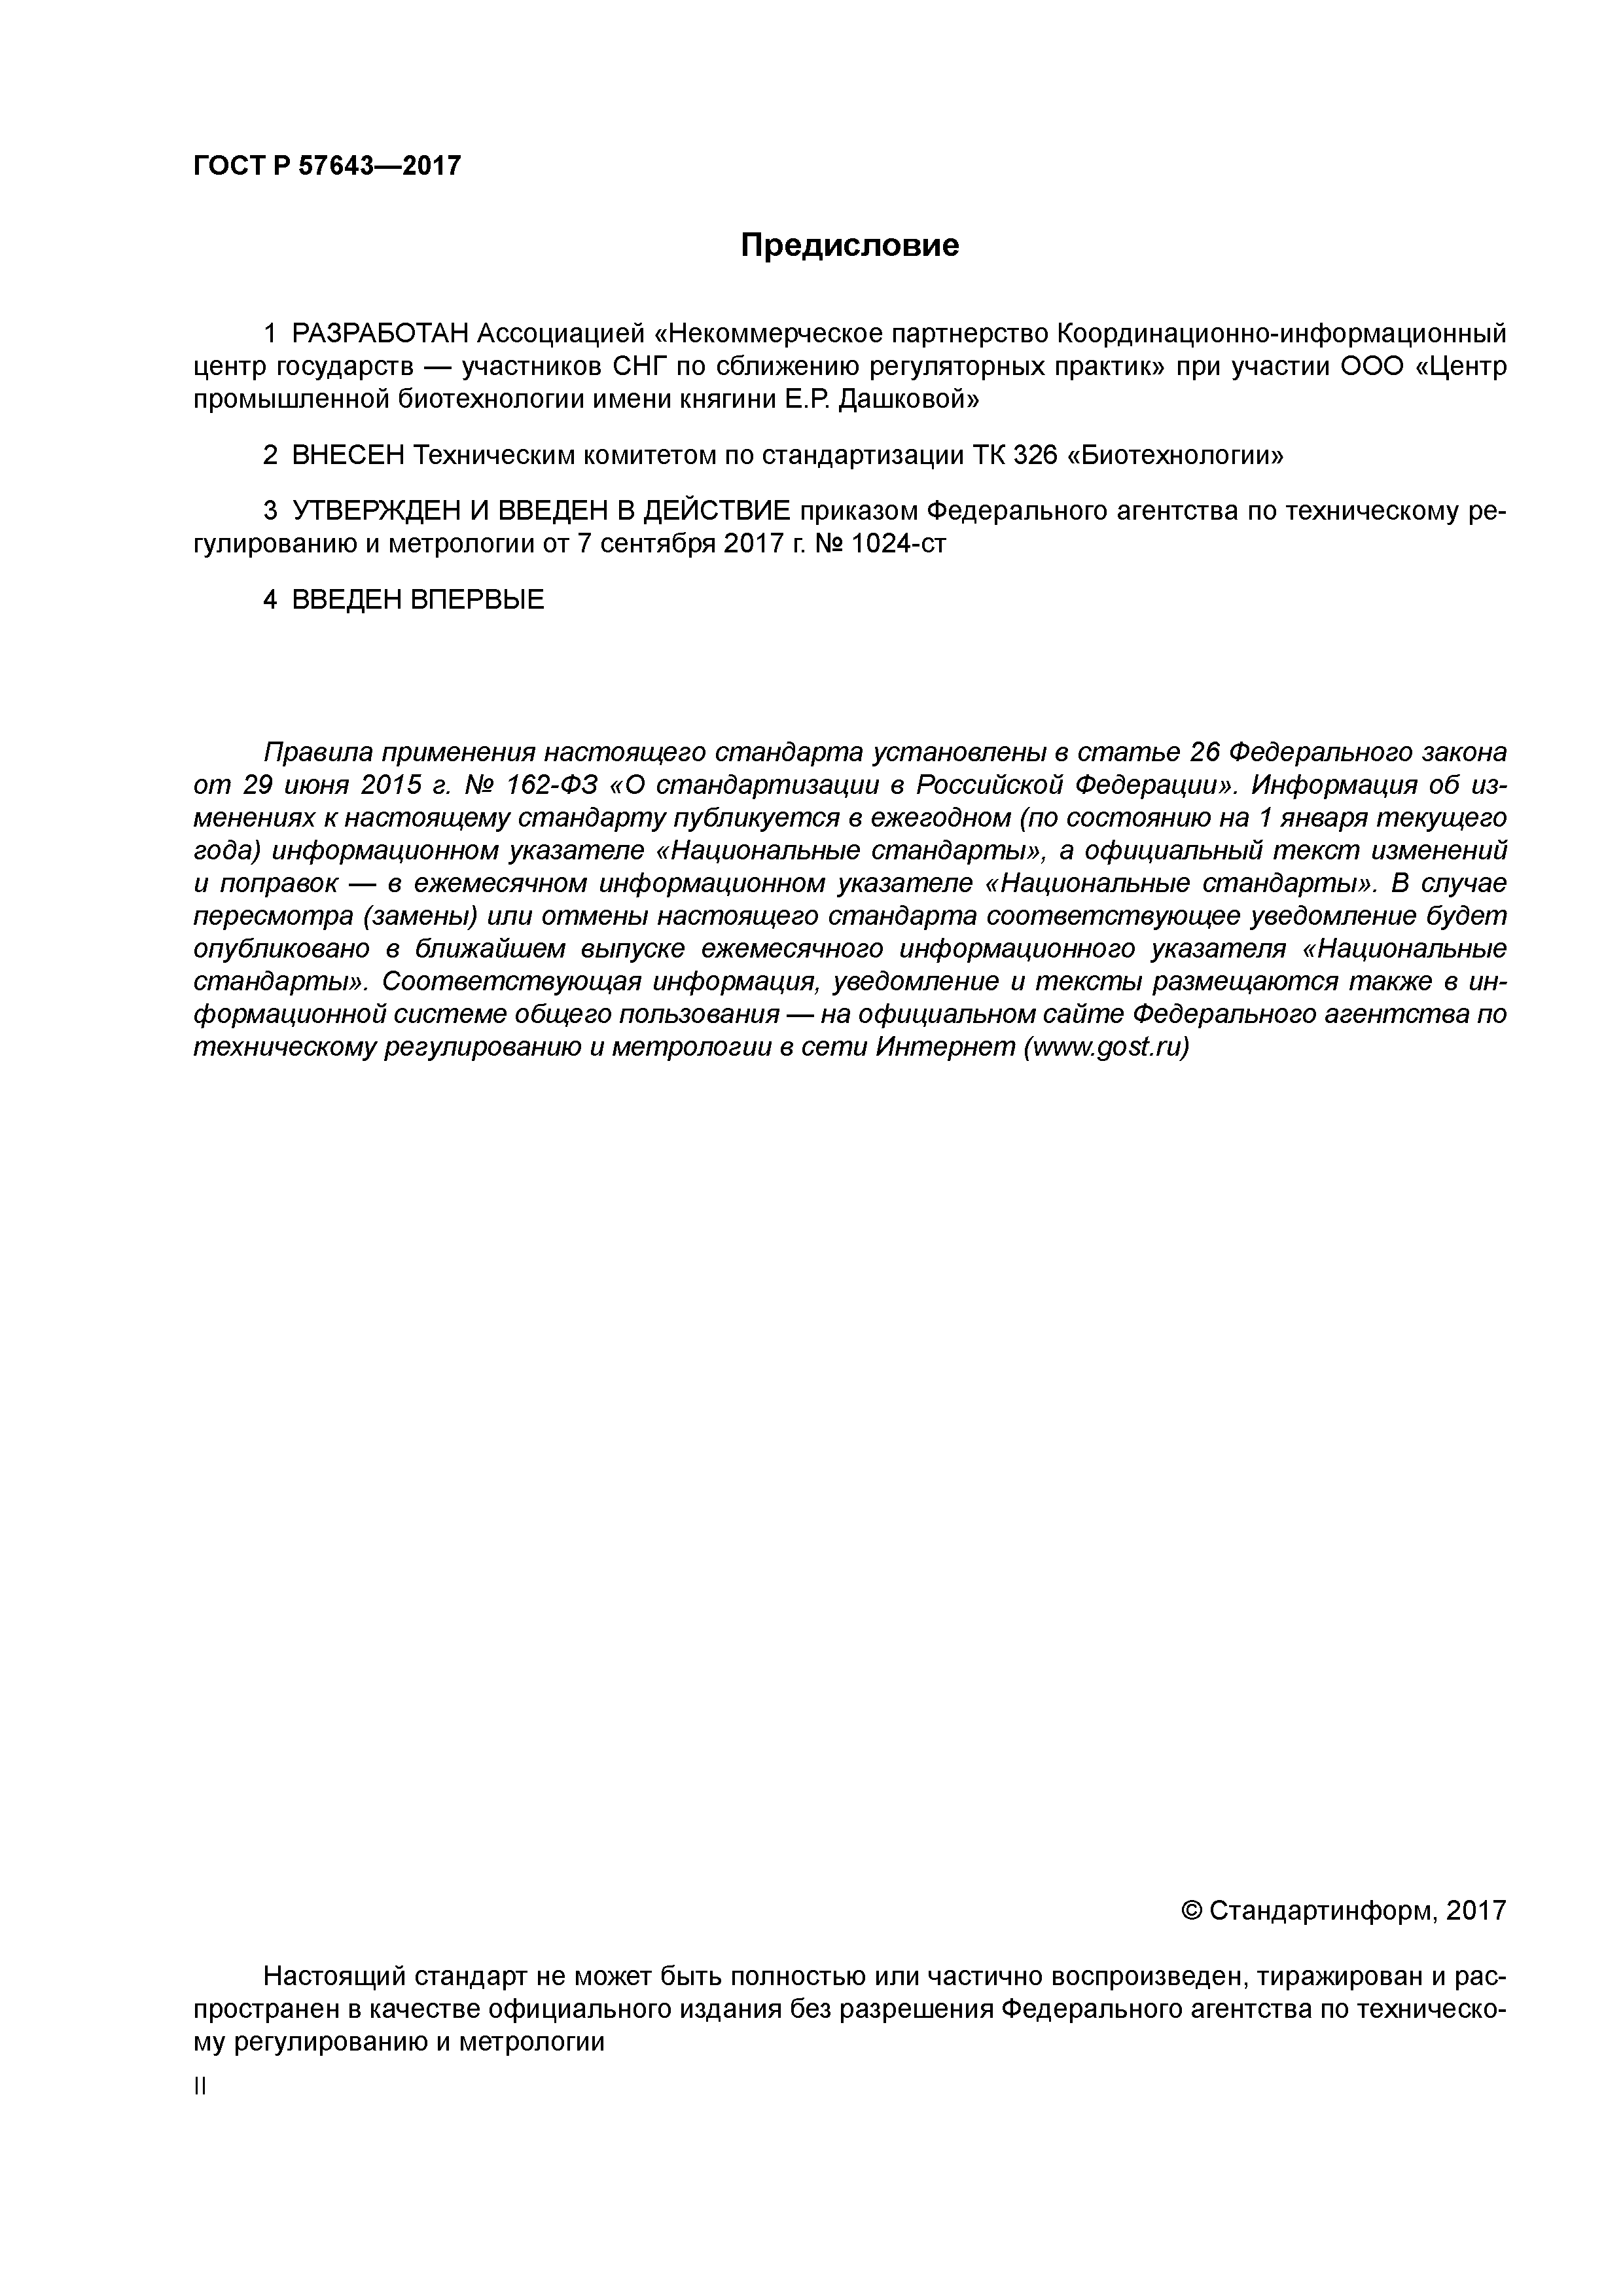 ГОСТ Р 57643-2017